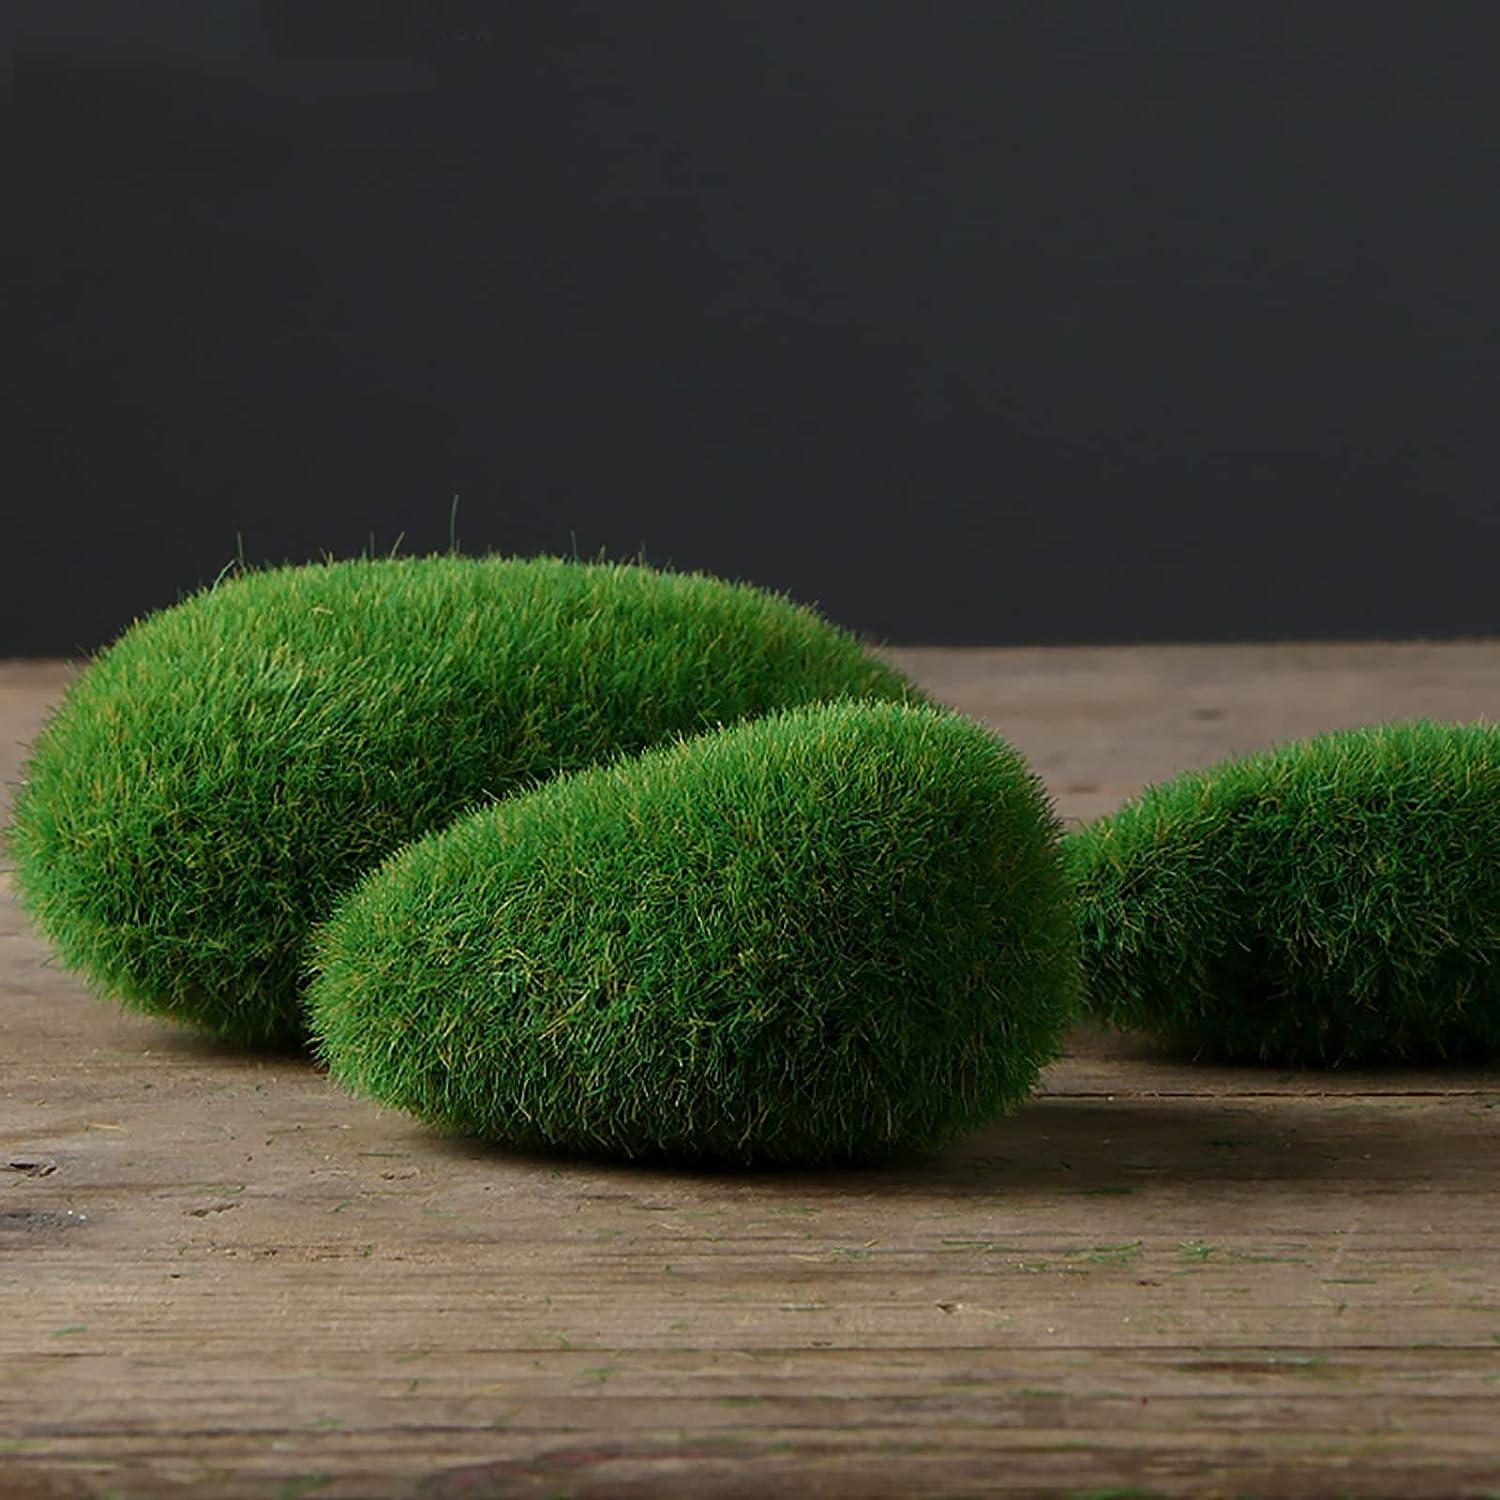 10PCS Artificial Moss Rocks Decorative, DIY Stone Miniature Green Moss Balls,for  Floral Arrangements Gardens Crafting Promotion